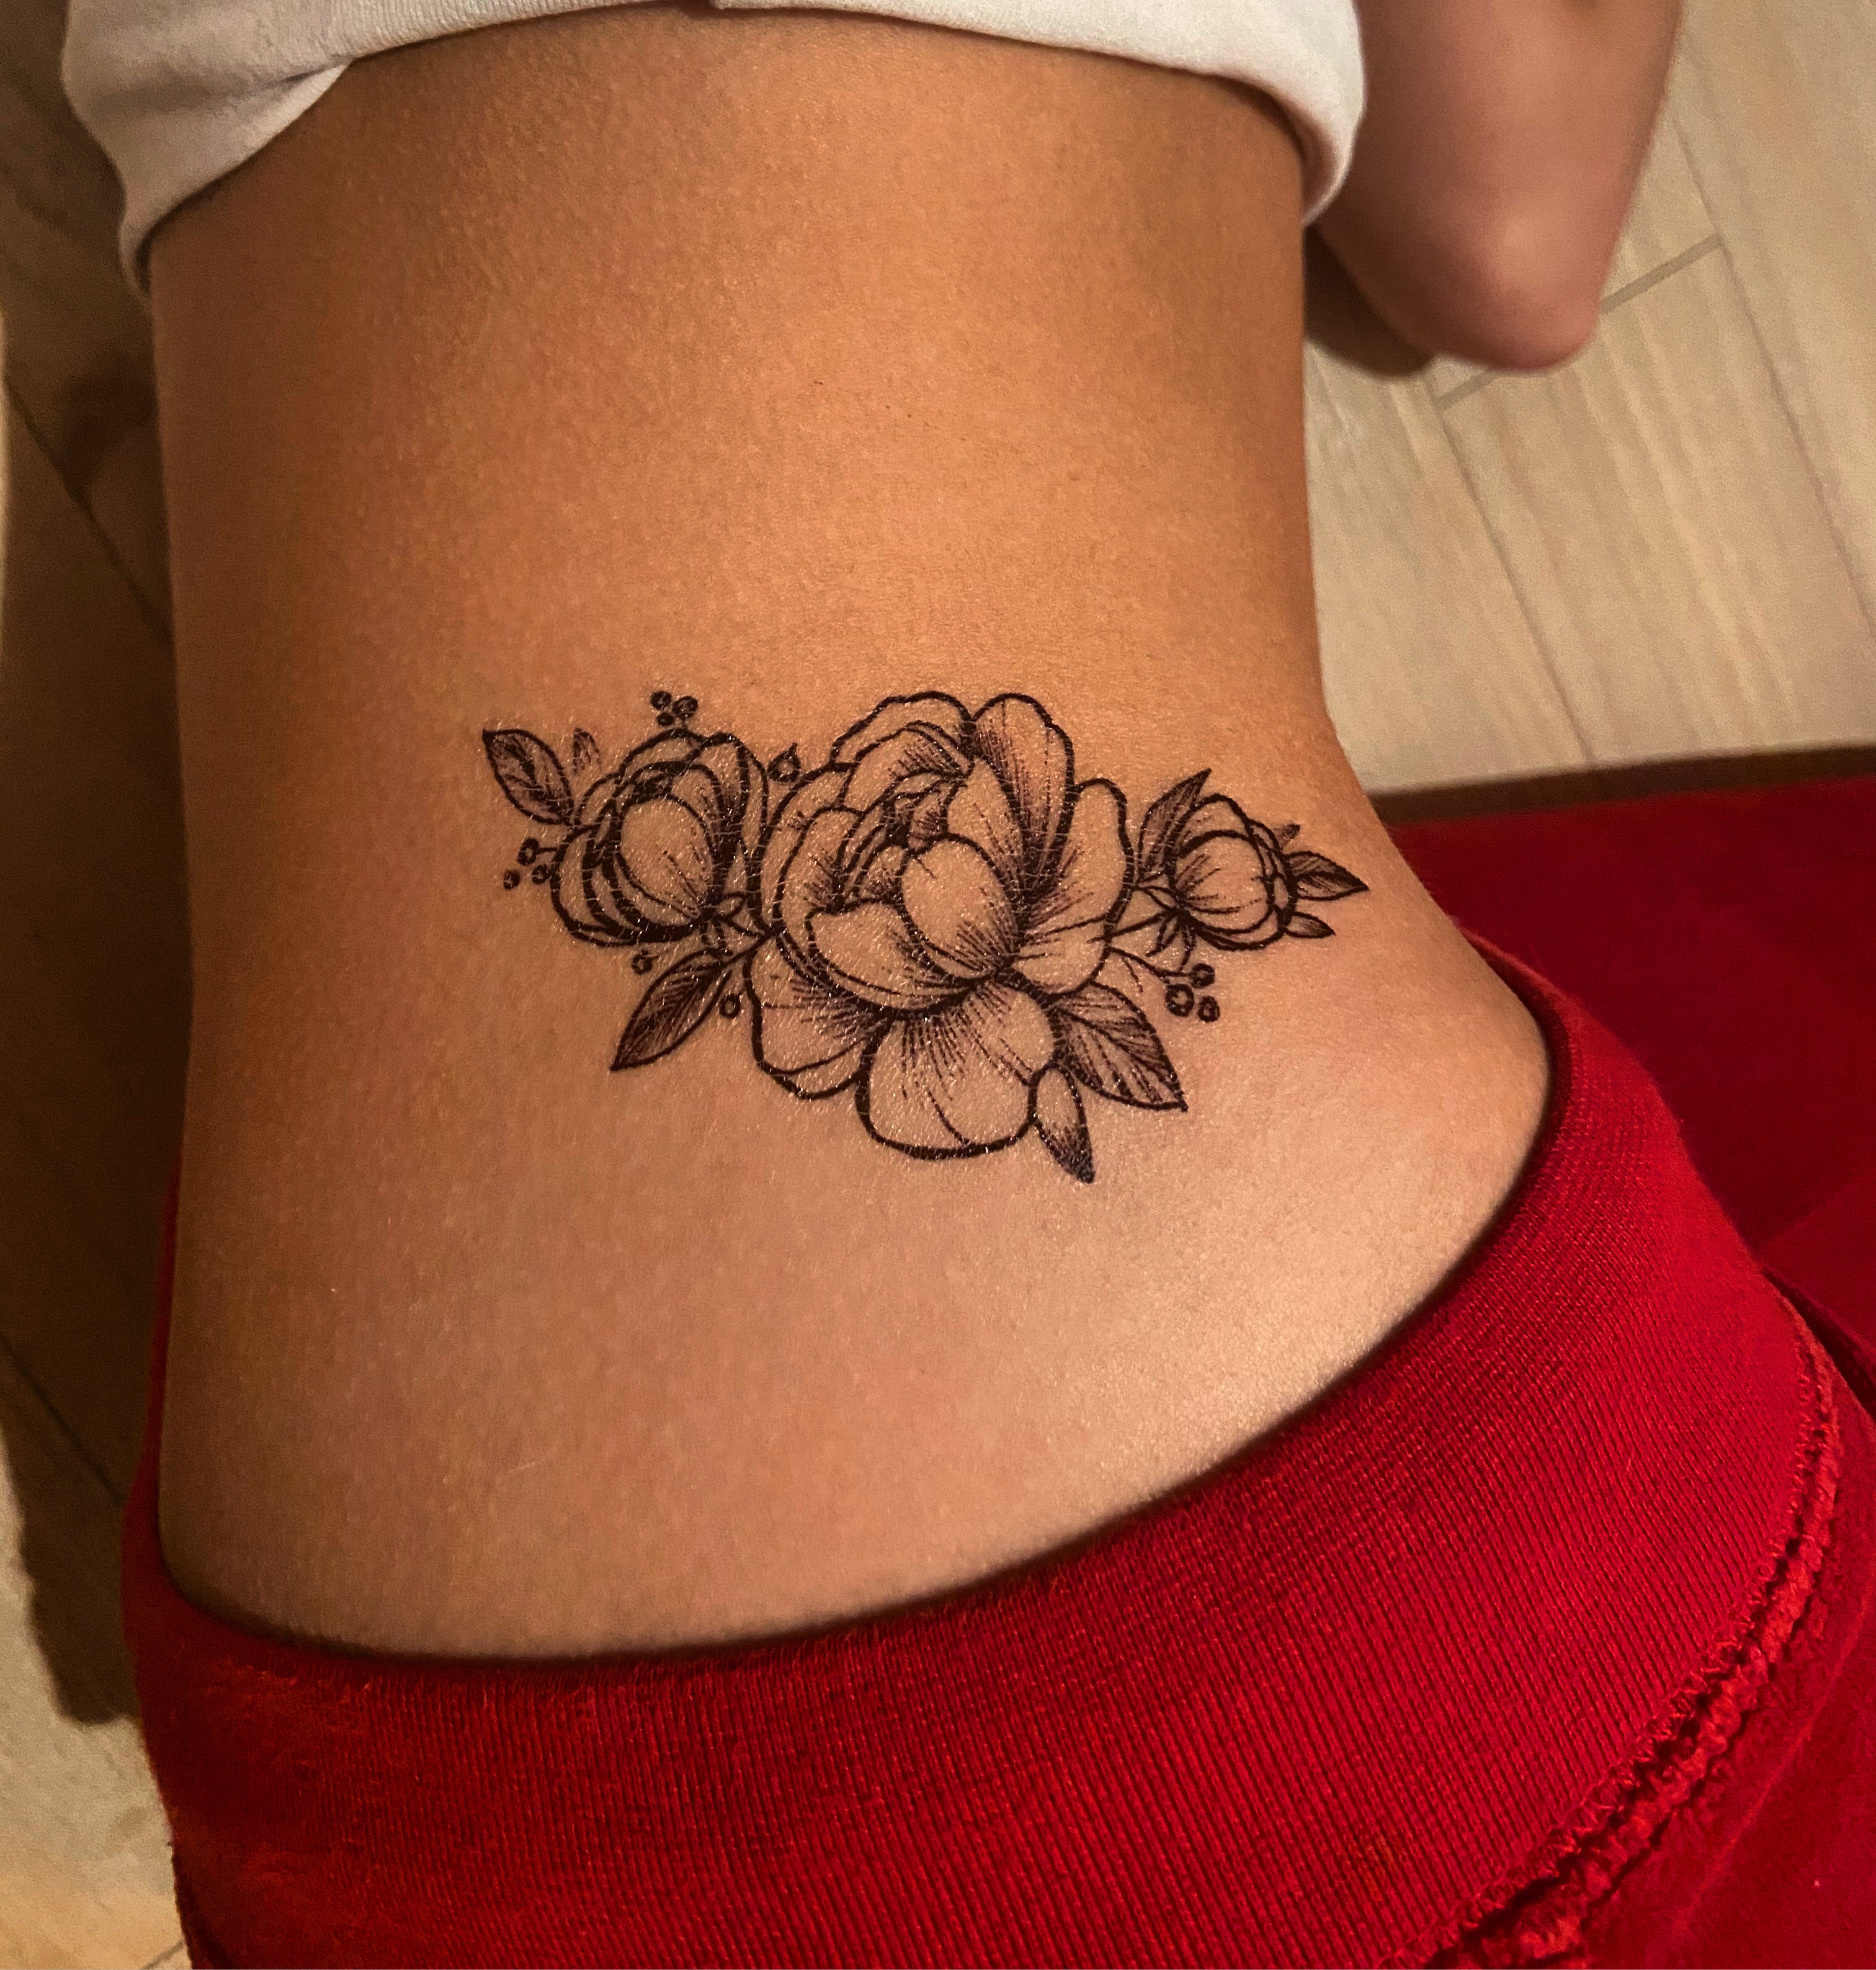 Black ink flower tattoos